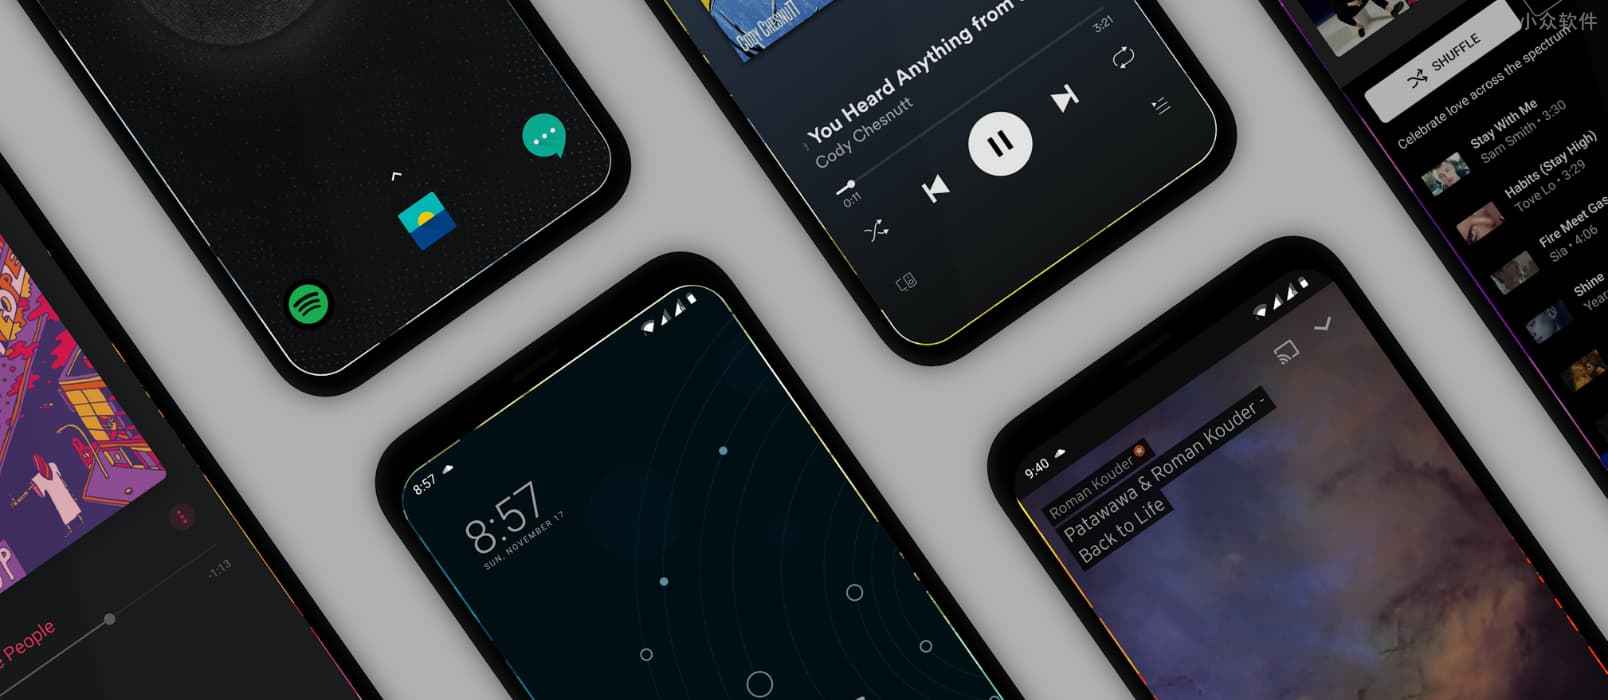 Muviz Edge - 利用屏幕边缘，可视化听歌[Android] 1